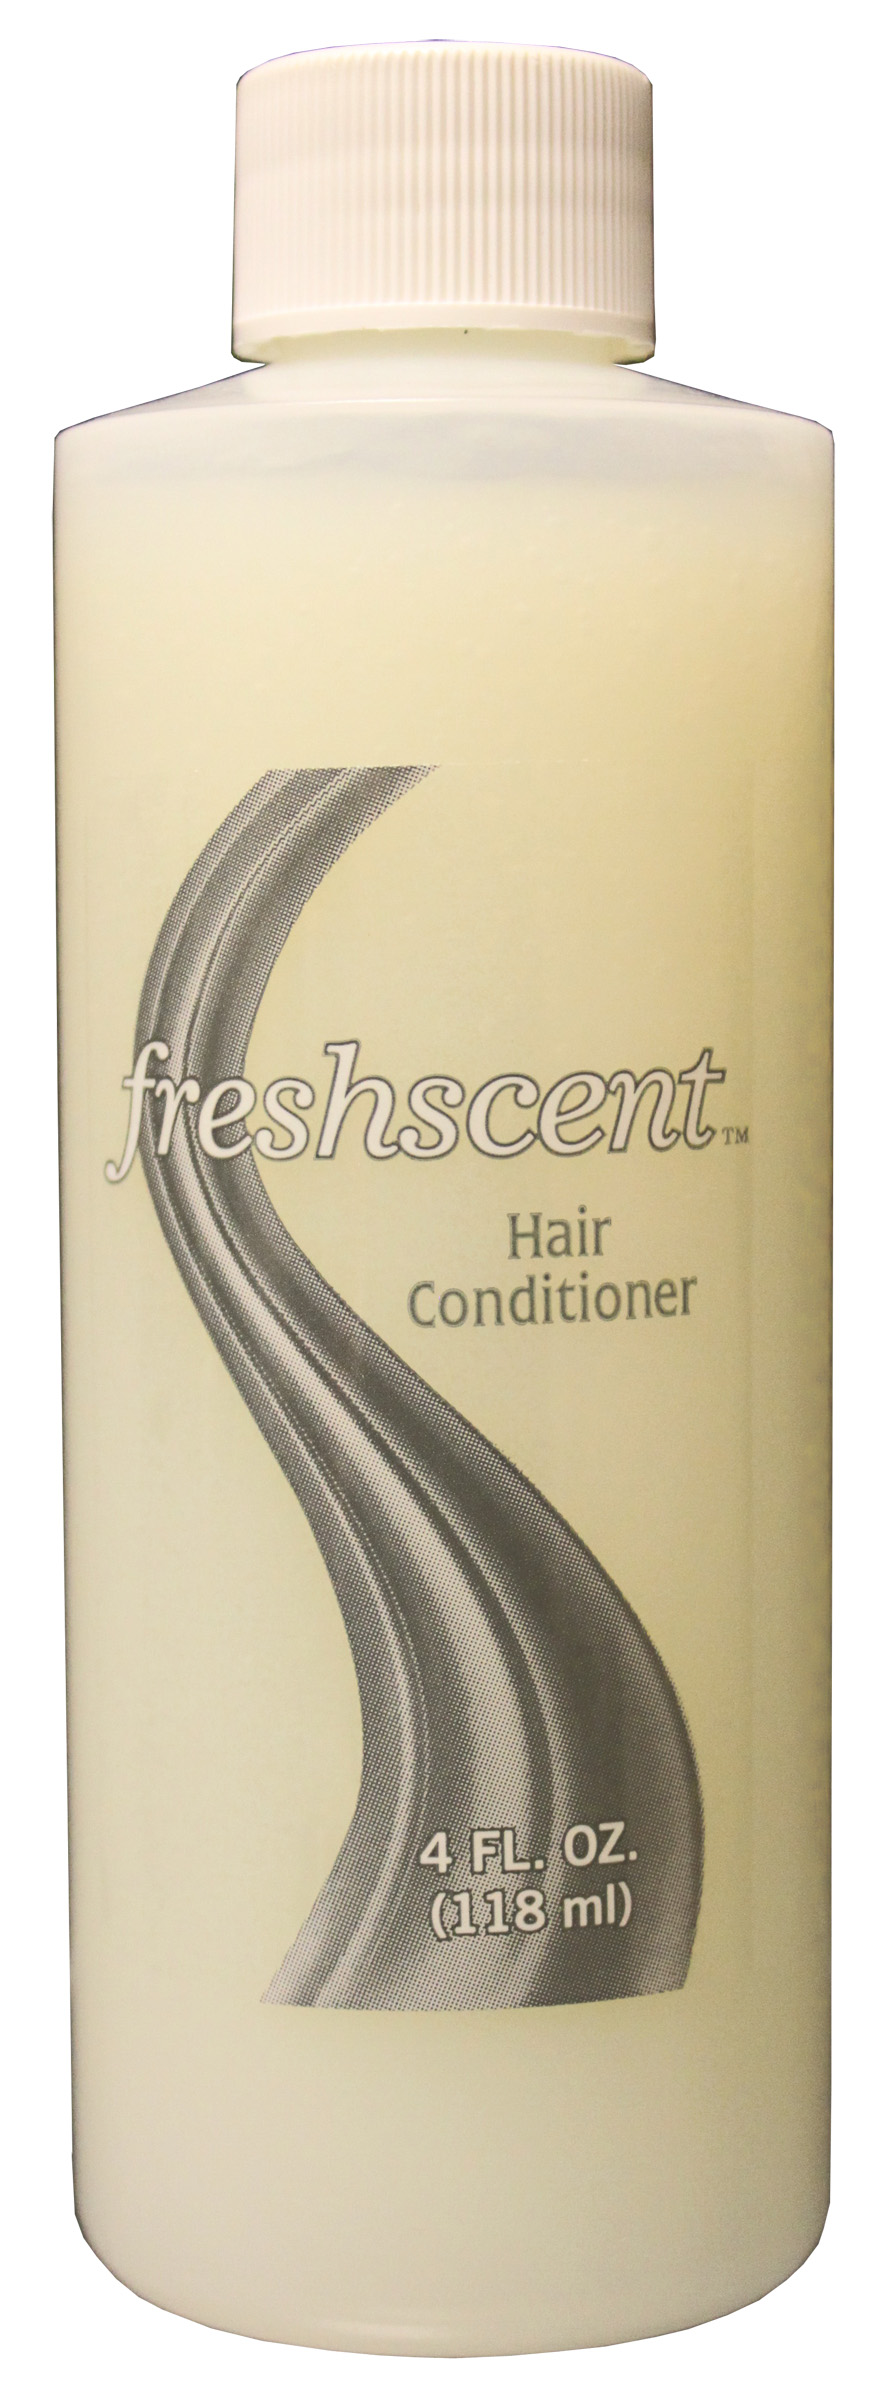 Freshscent 4 oz. Hair Conditioner